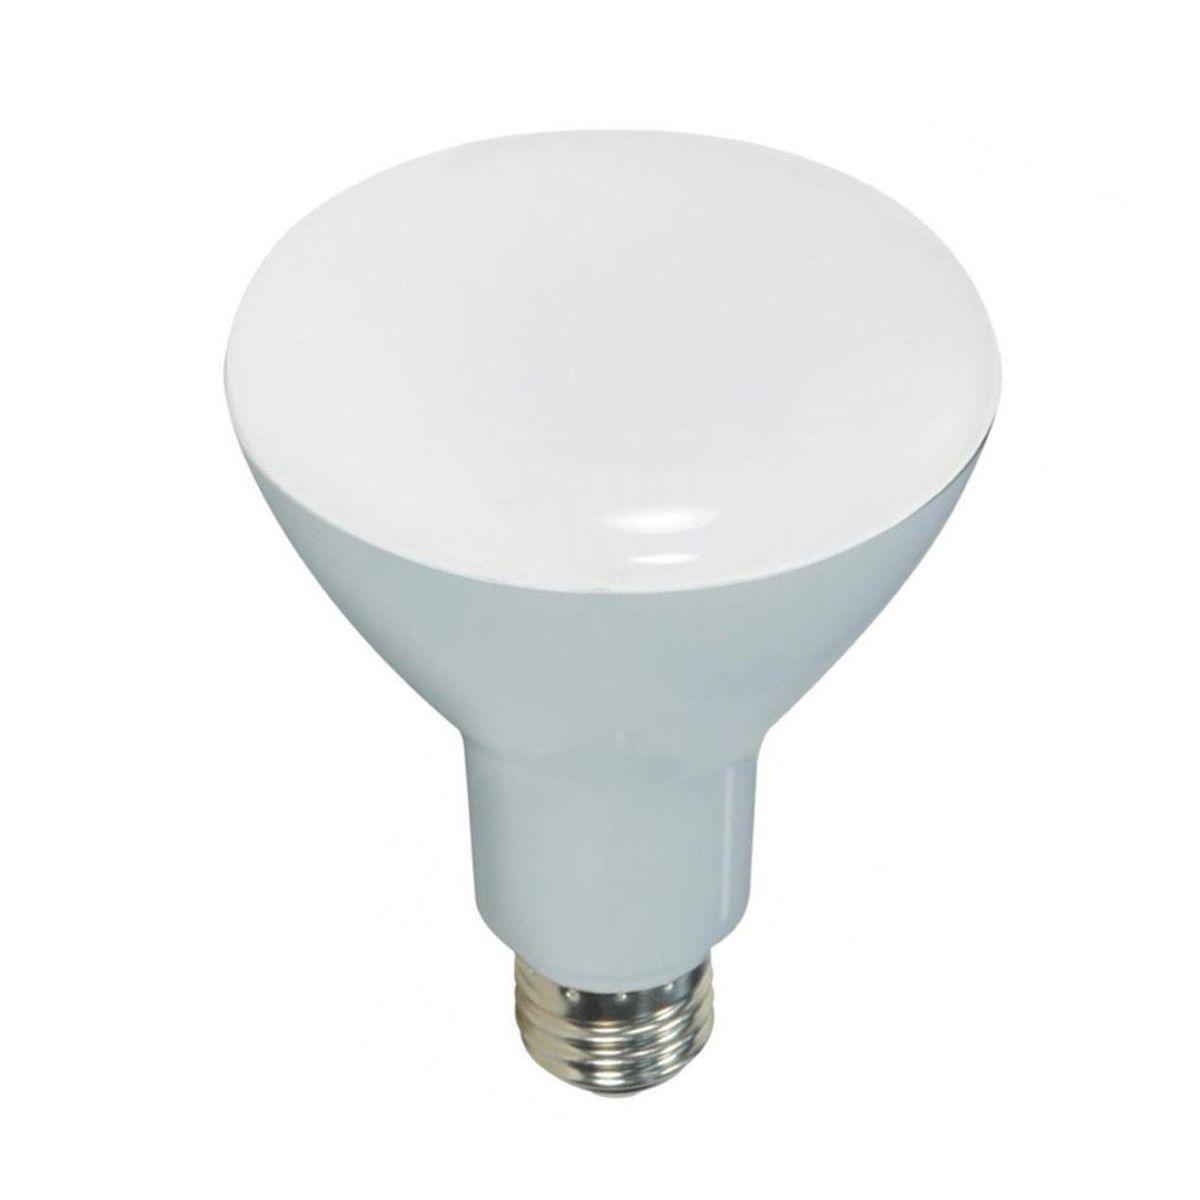 LED R30/BR30 Reflector bulb, 7 watt, 650 Lumens, 3500K, E26 Medium Base, 105 Deg. Flood - Bees Lighting